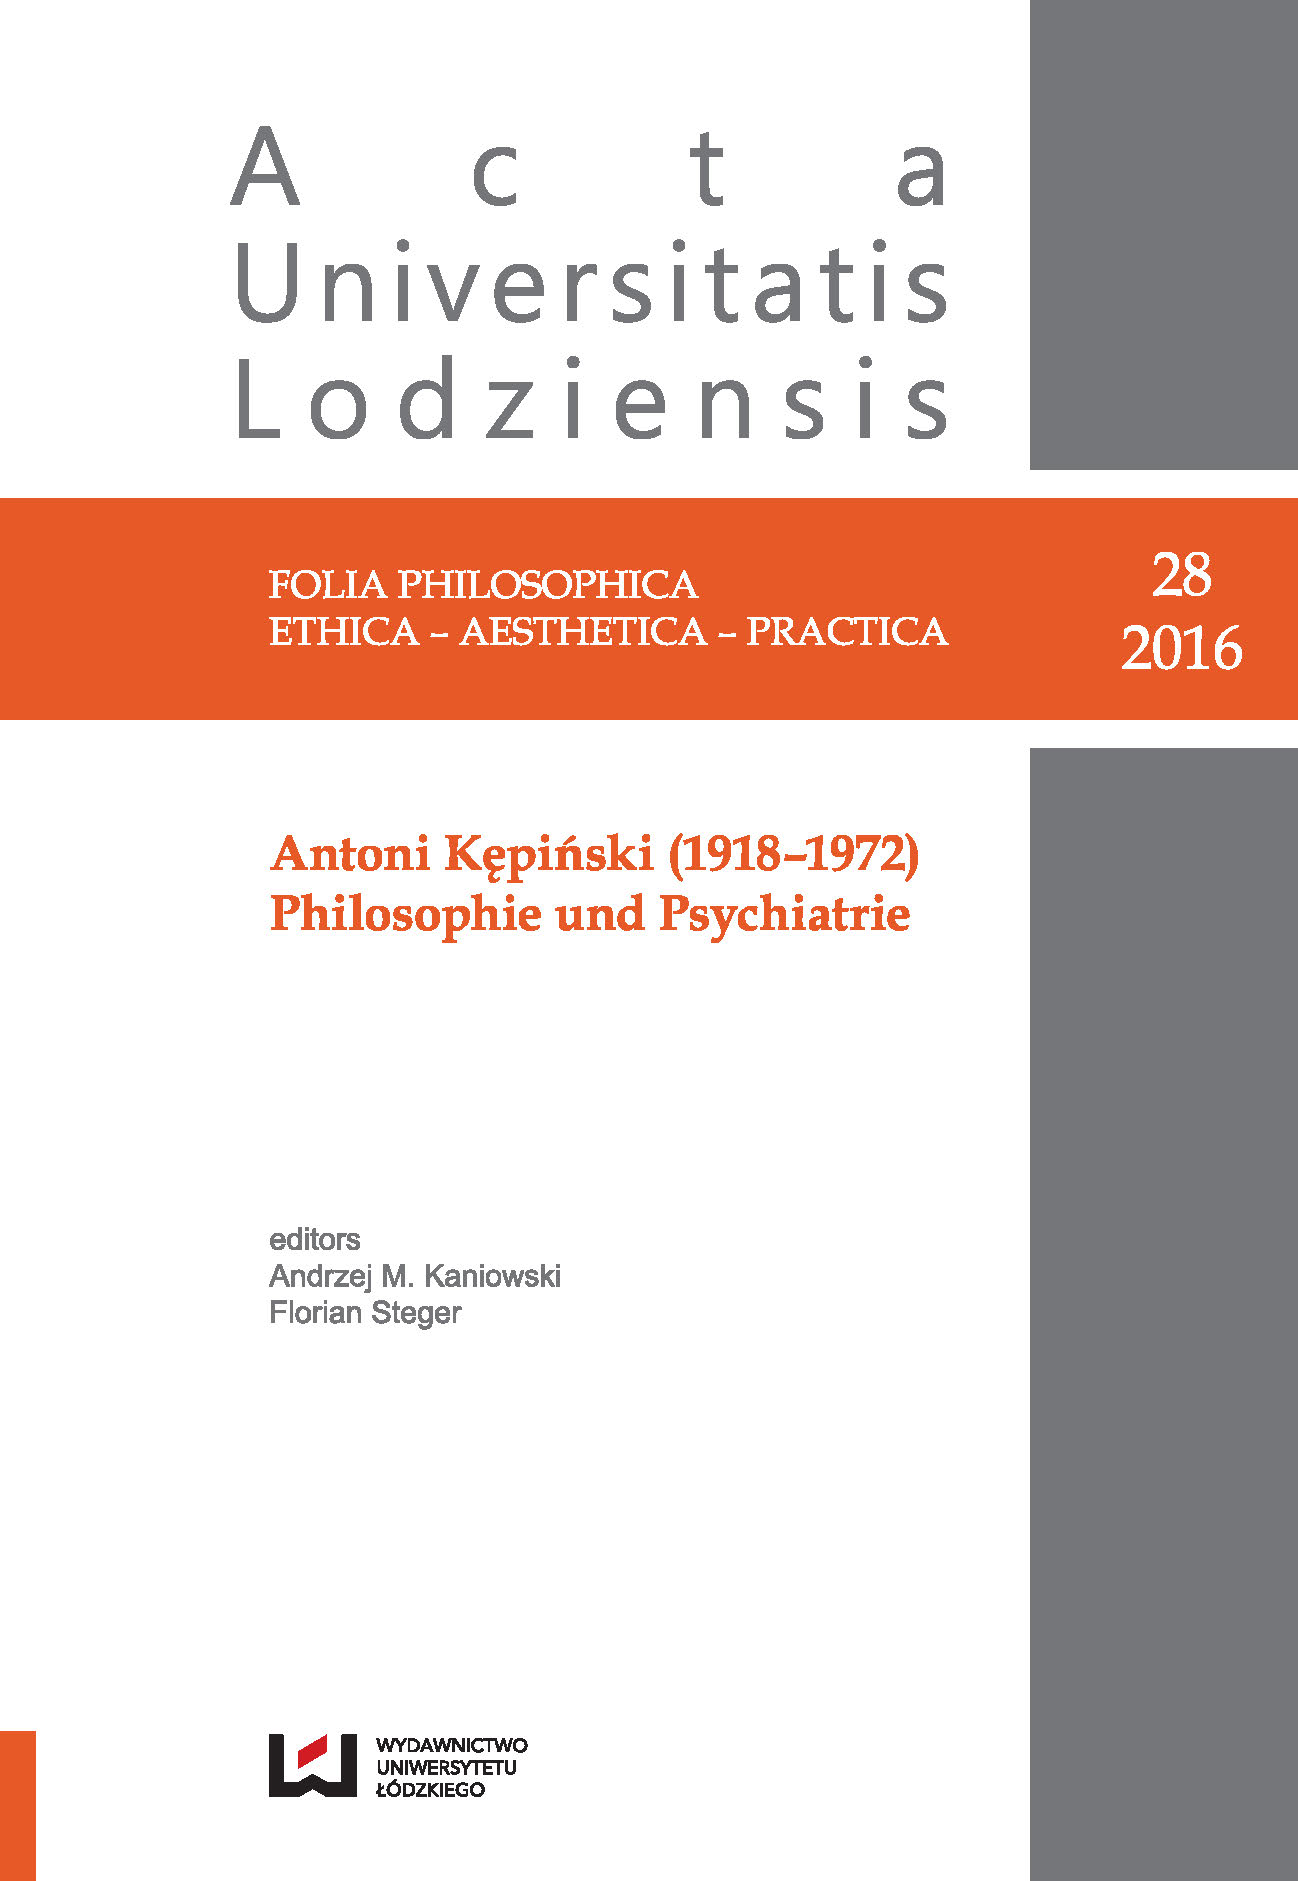 					View No. 28 (2016): Antoni Kępiński (1918-1972). Philosophie und Psychiatrie
				